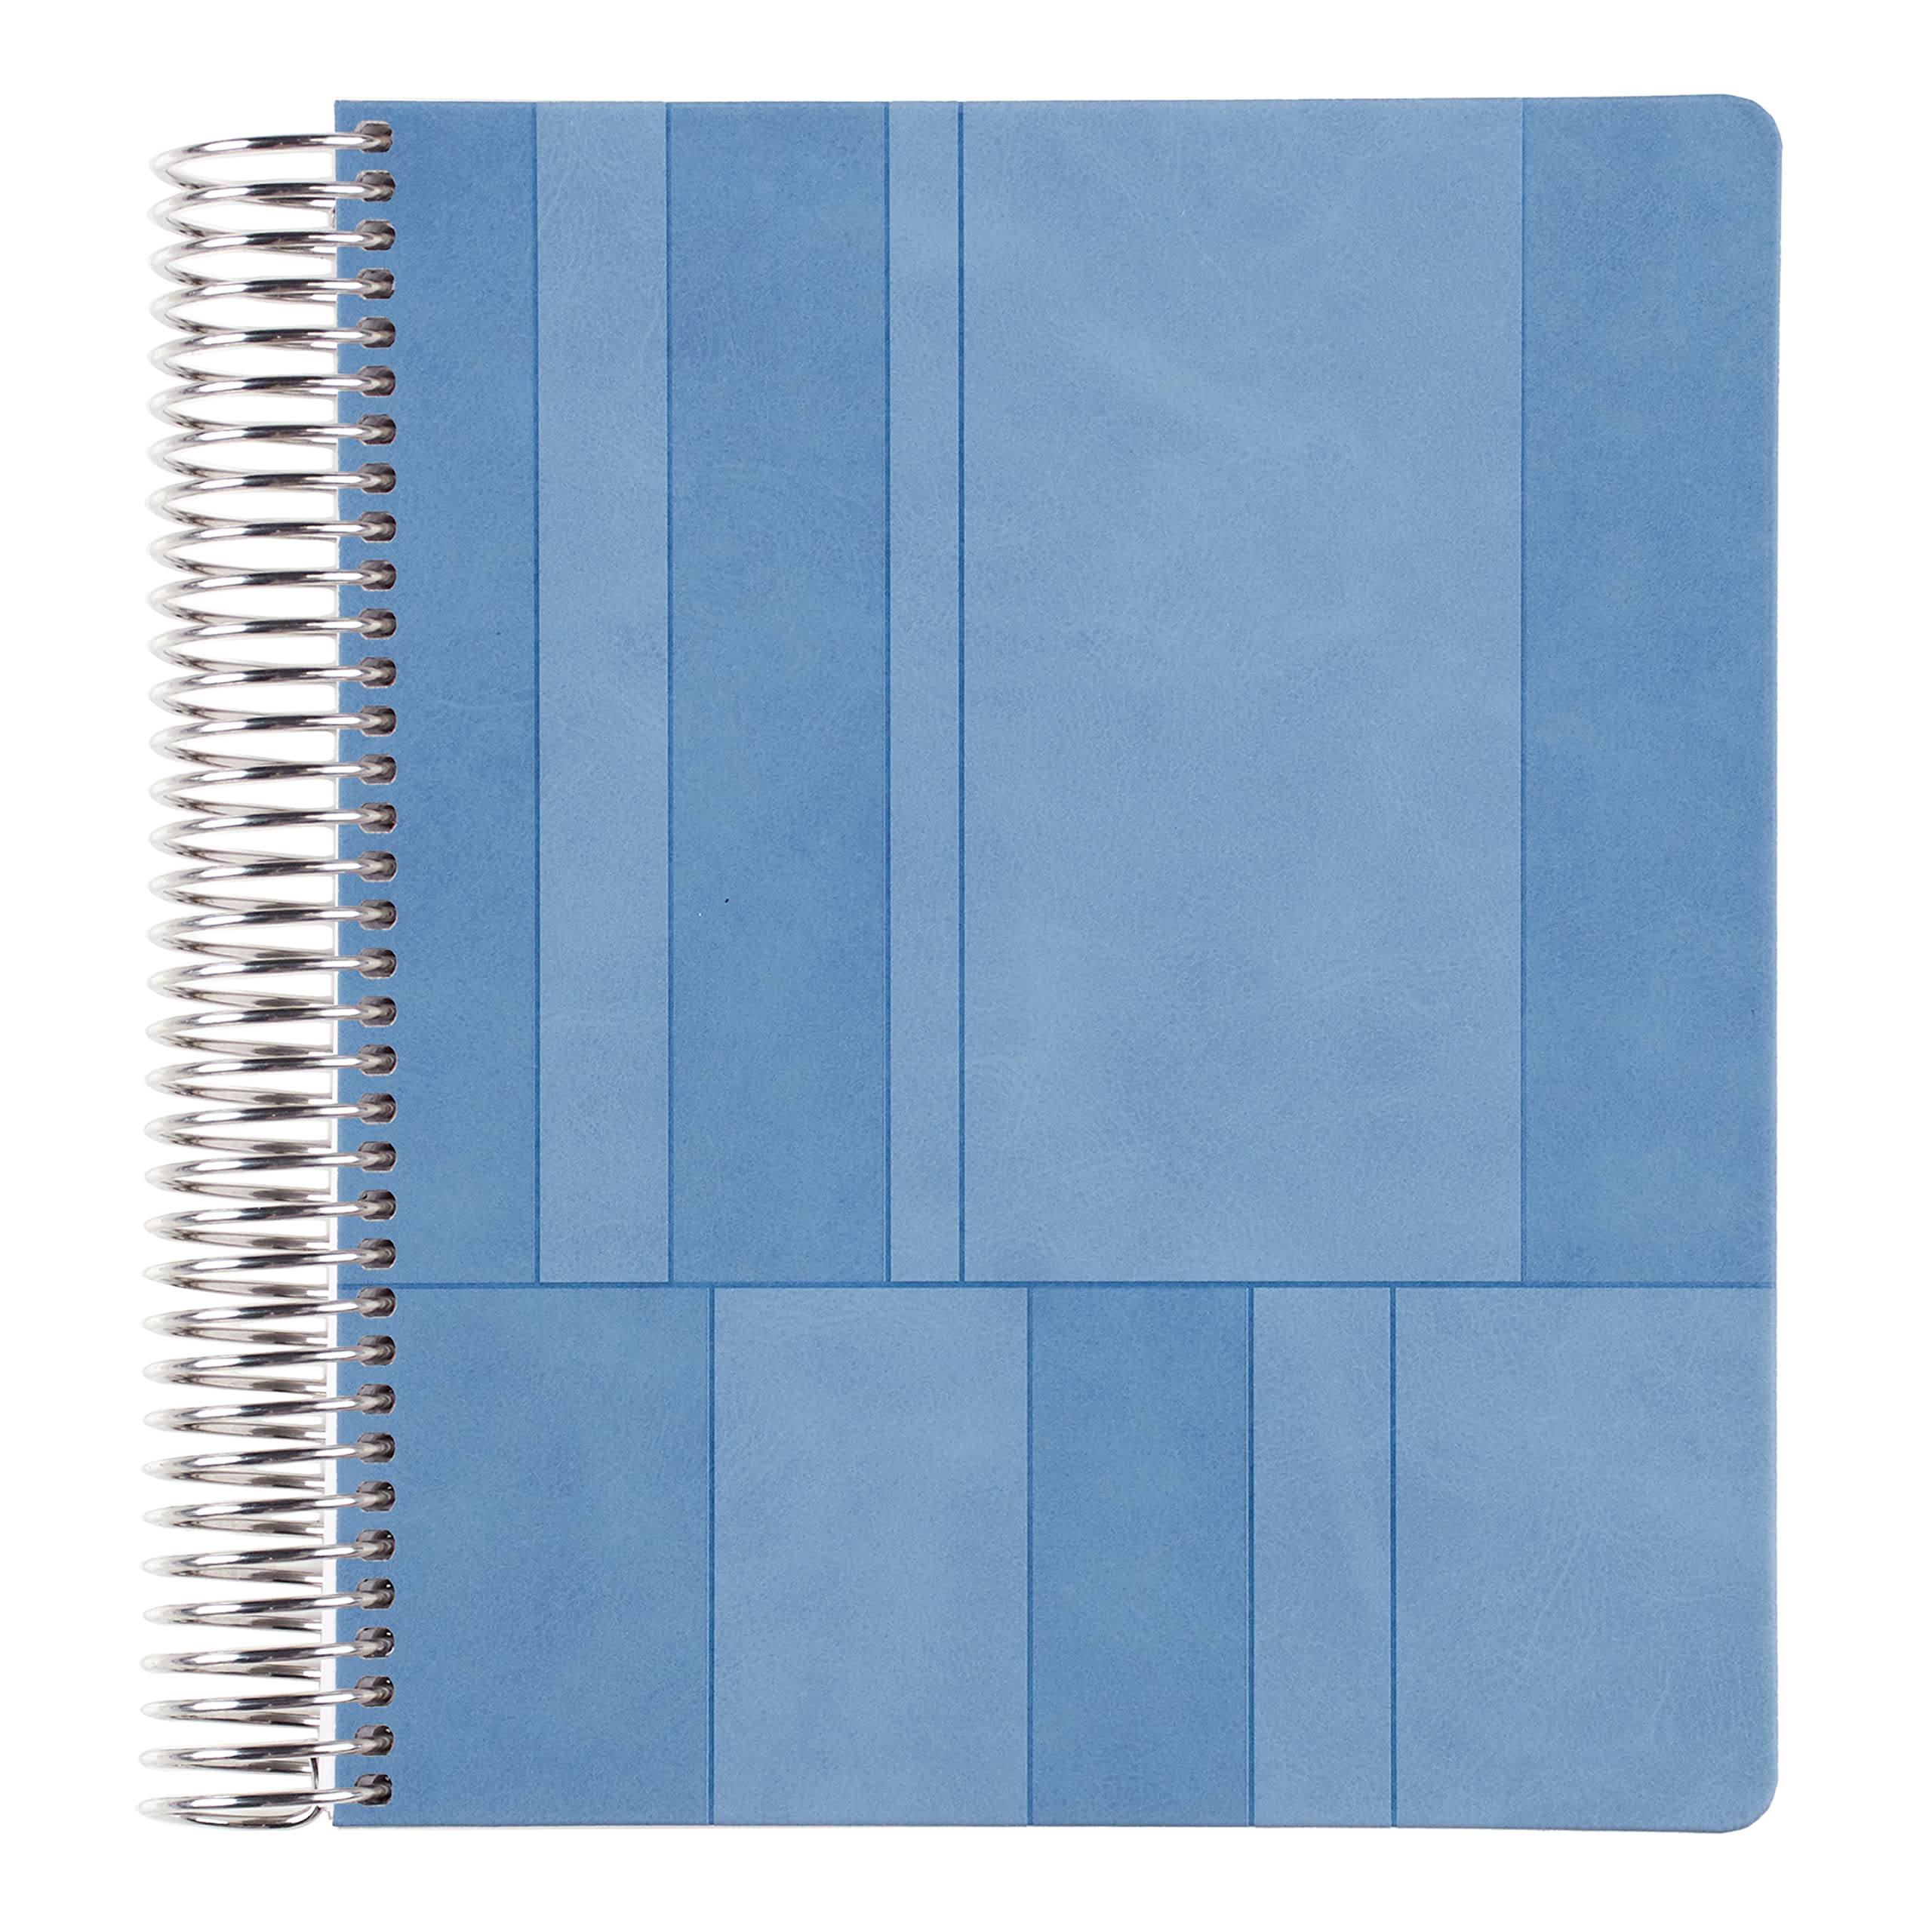 Erin Condren 7" x 9" Platinum Coiled Focused Teacher Lesson Planner (August 2023 - July 2024) - Blue Stripe Vegan Leather Cover - 80 Lb. Thick Mohawk Paper, 12 Month Calendar